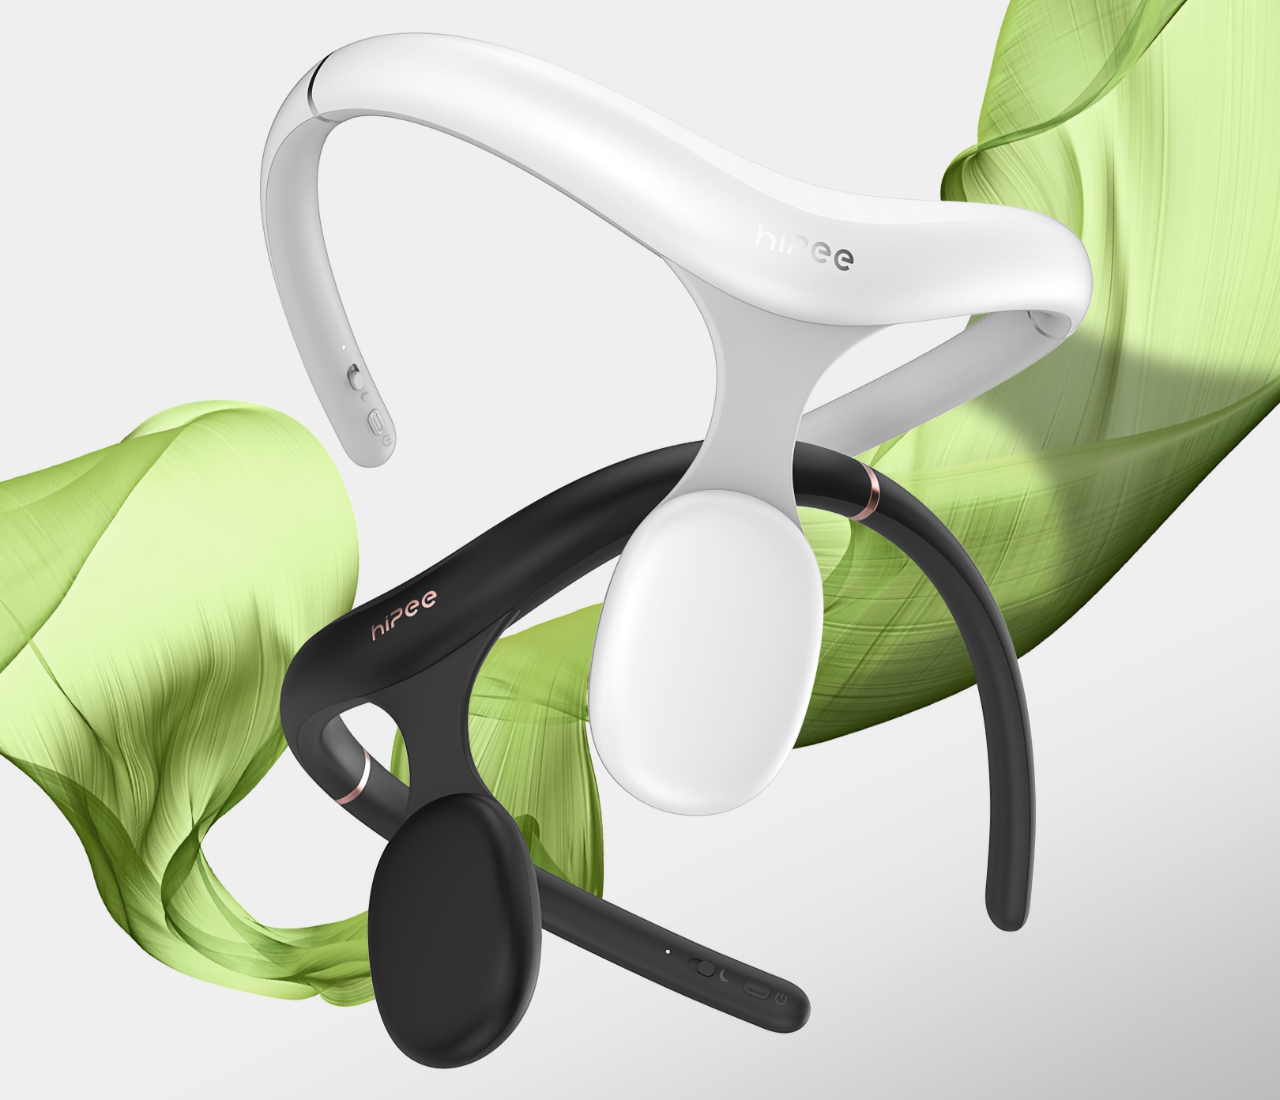 Xiaomi unveils Hipee Smart Health Neckband: $ 30 Posture Correction Device